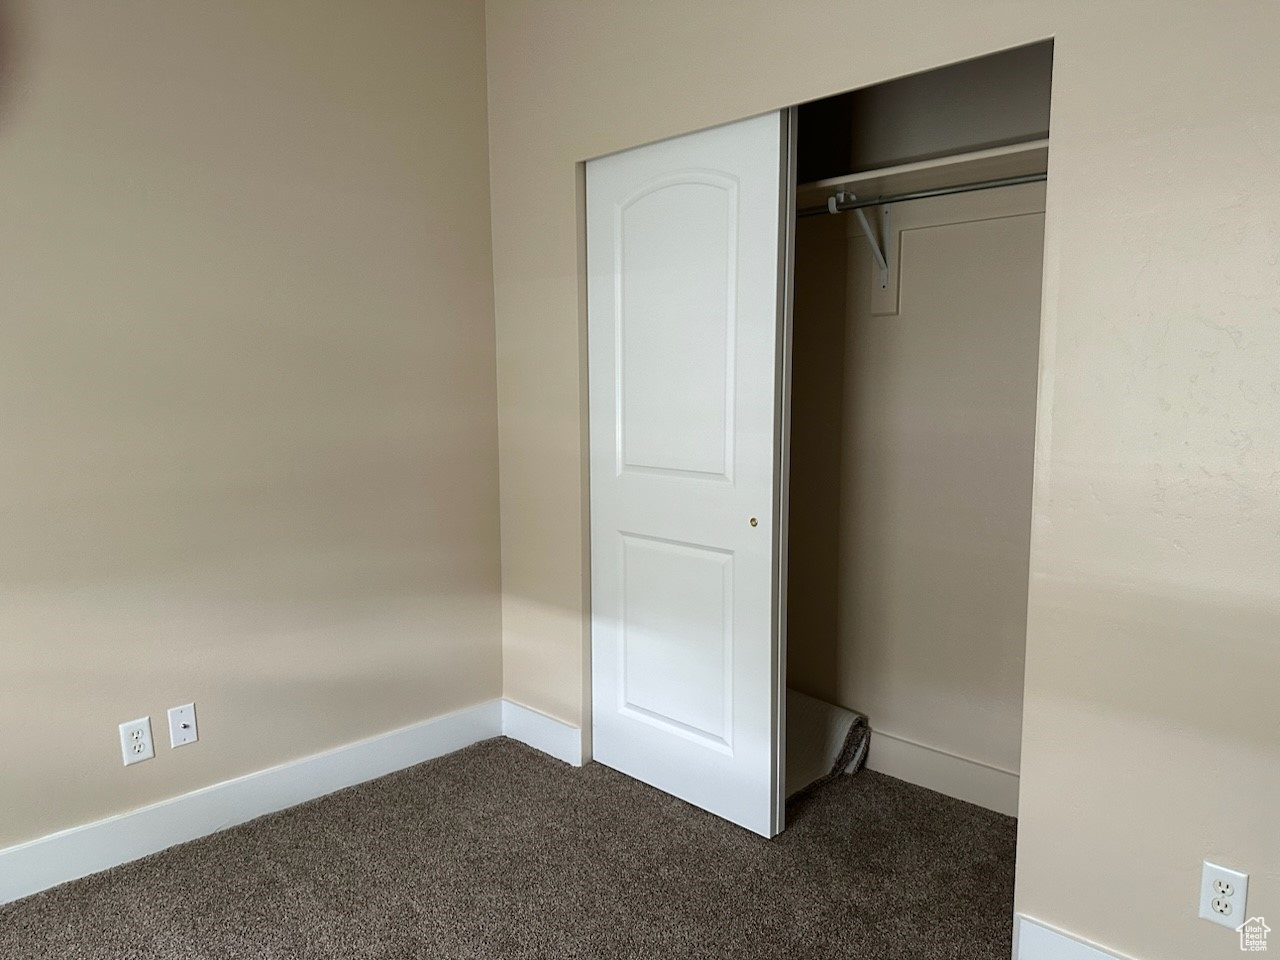 Interior space featuring a closet and dark colored carpet